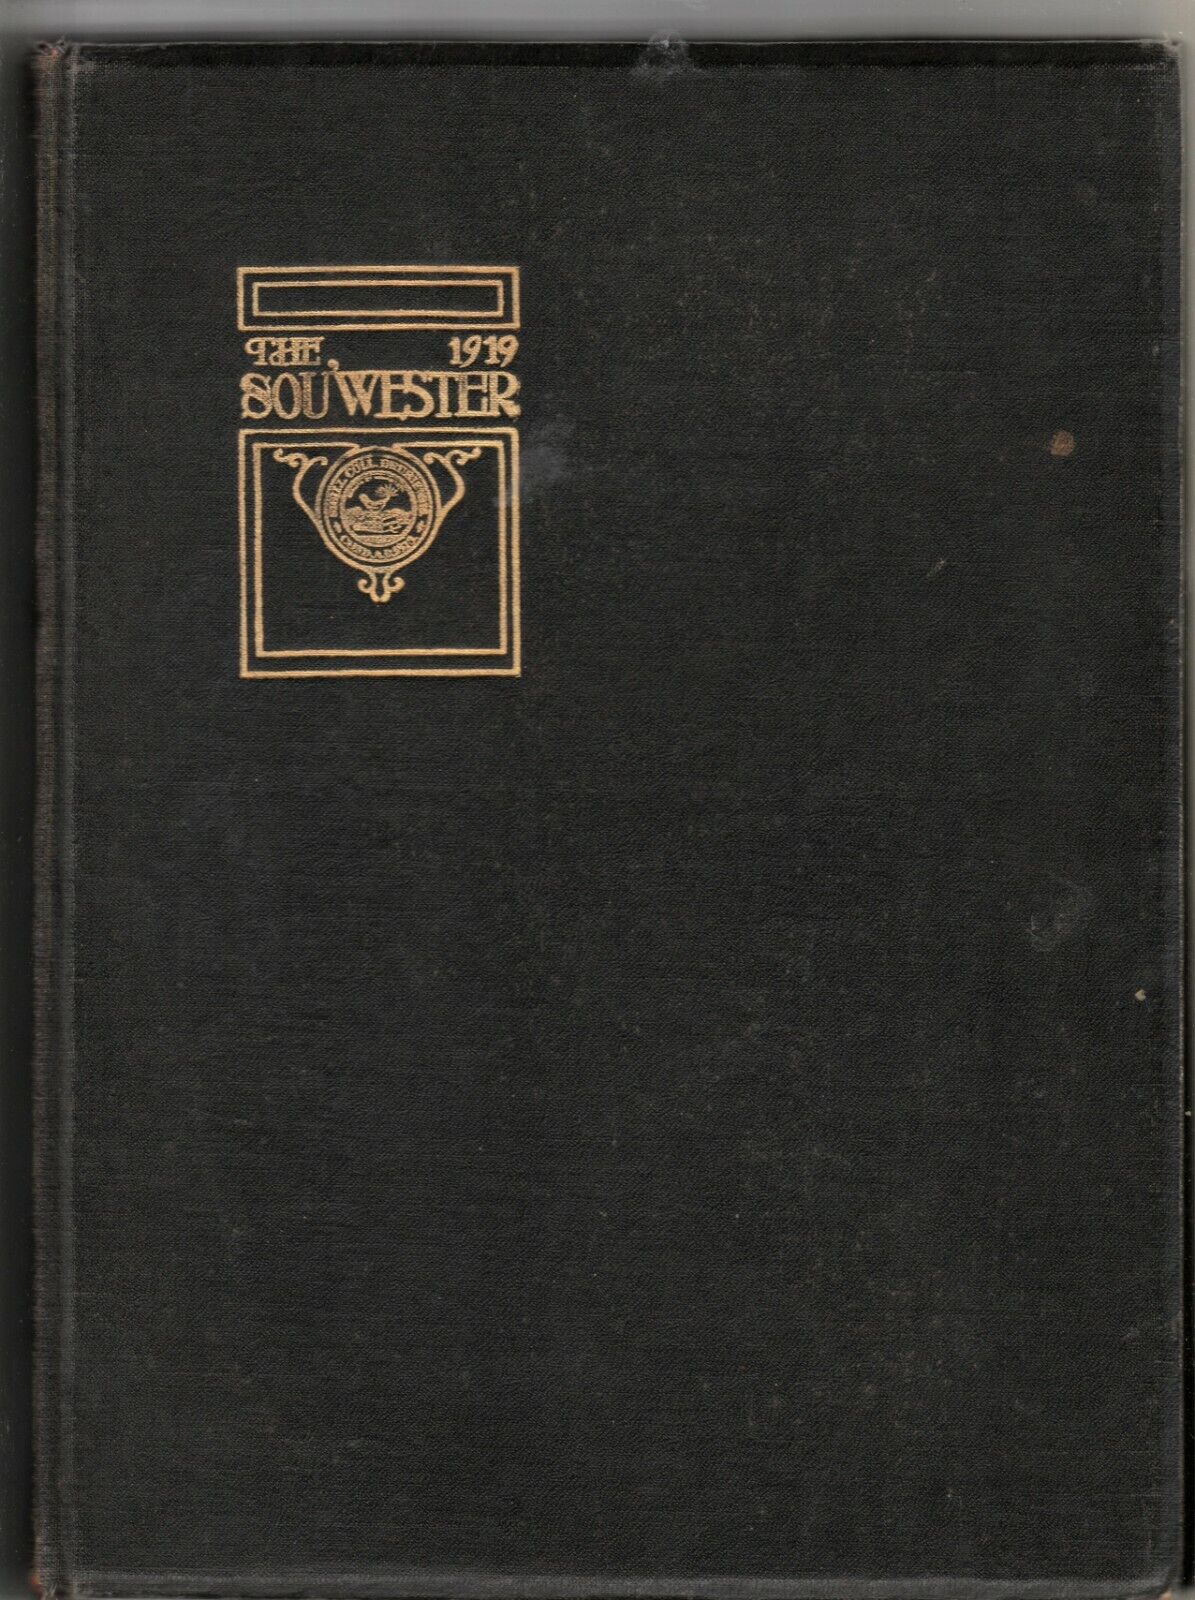 1919 Drury College Yearbook, Sout'Wester, Springfield, Missouri